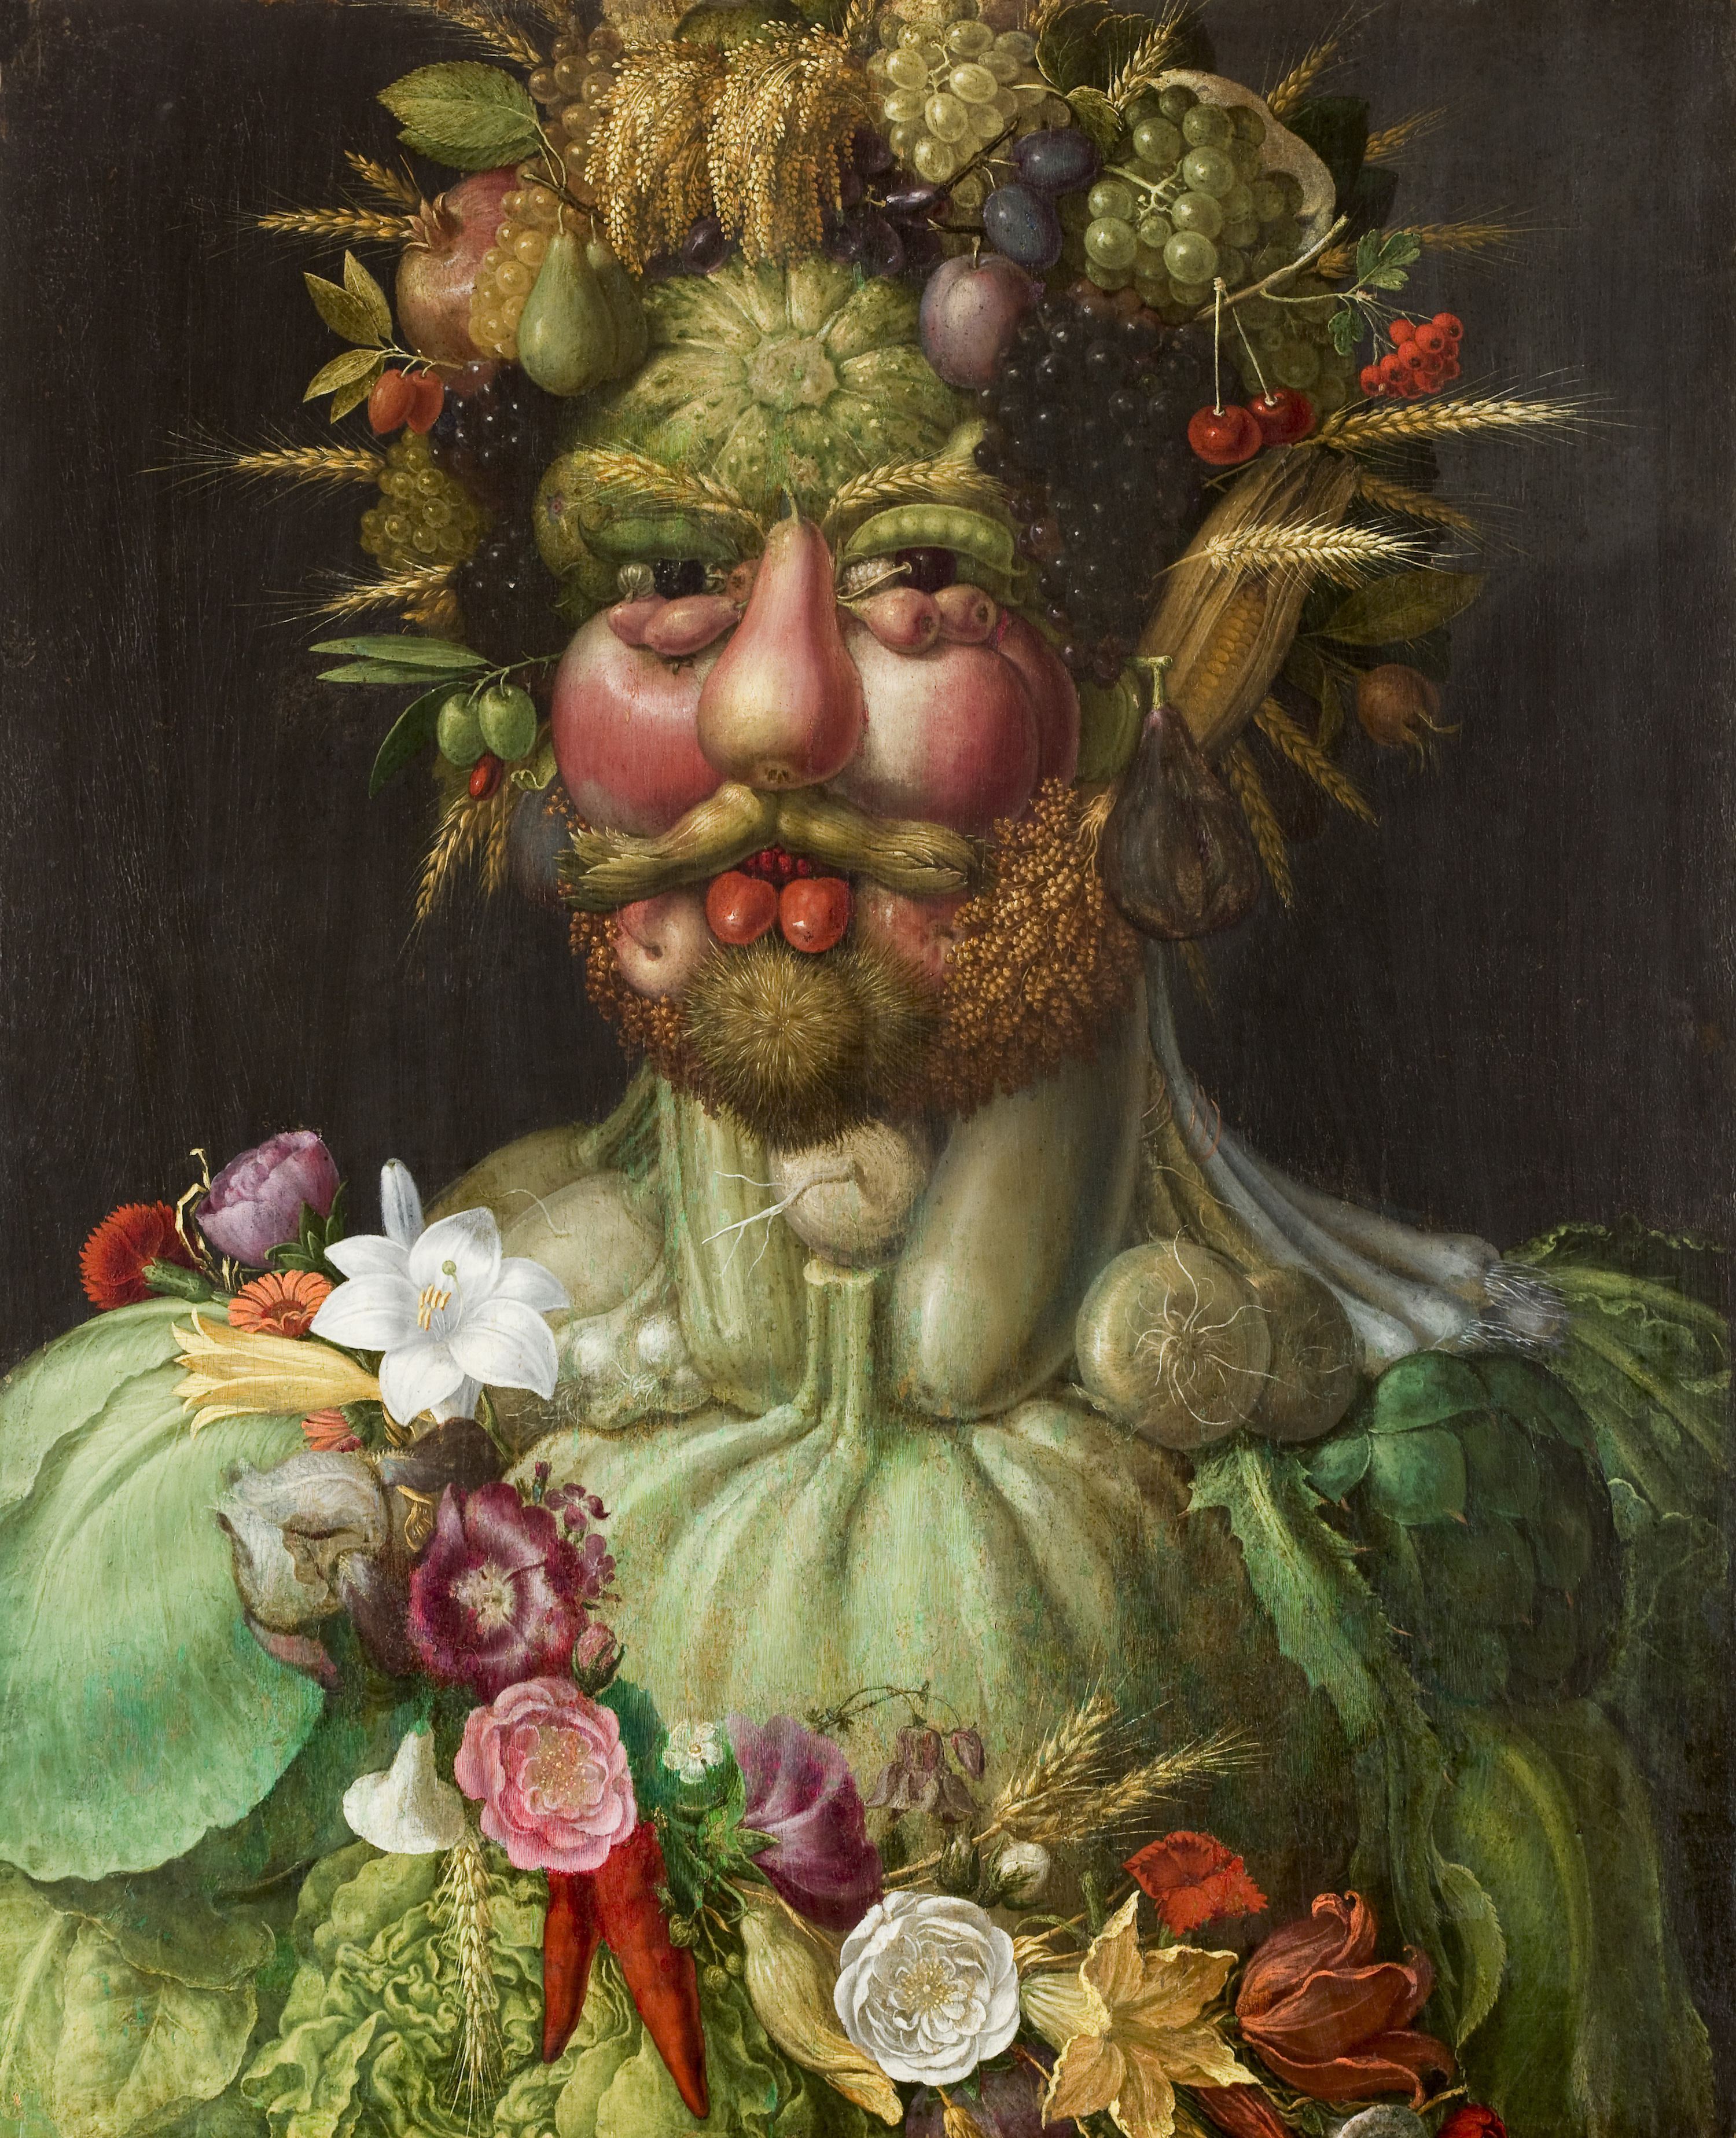 Vertumno by Giuseppe Arcimboldo - c. 1590 - 70.5 x 57.5 cm 